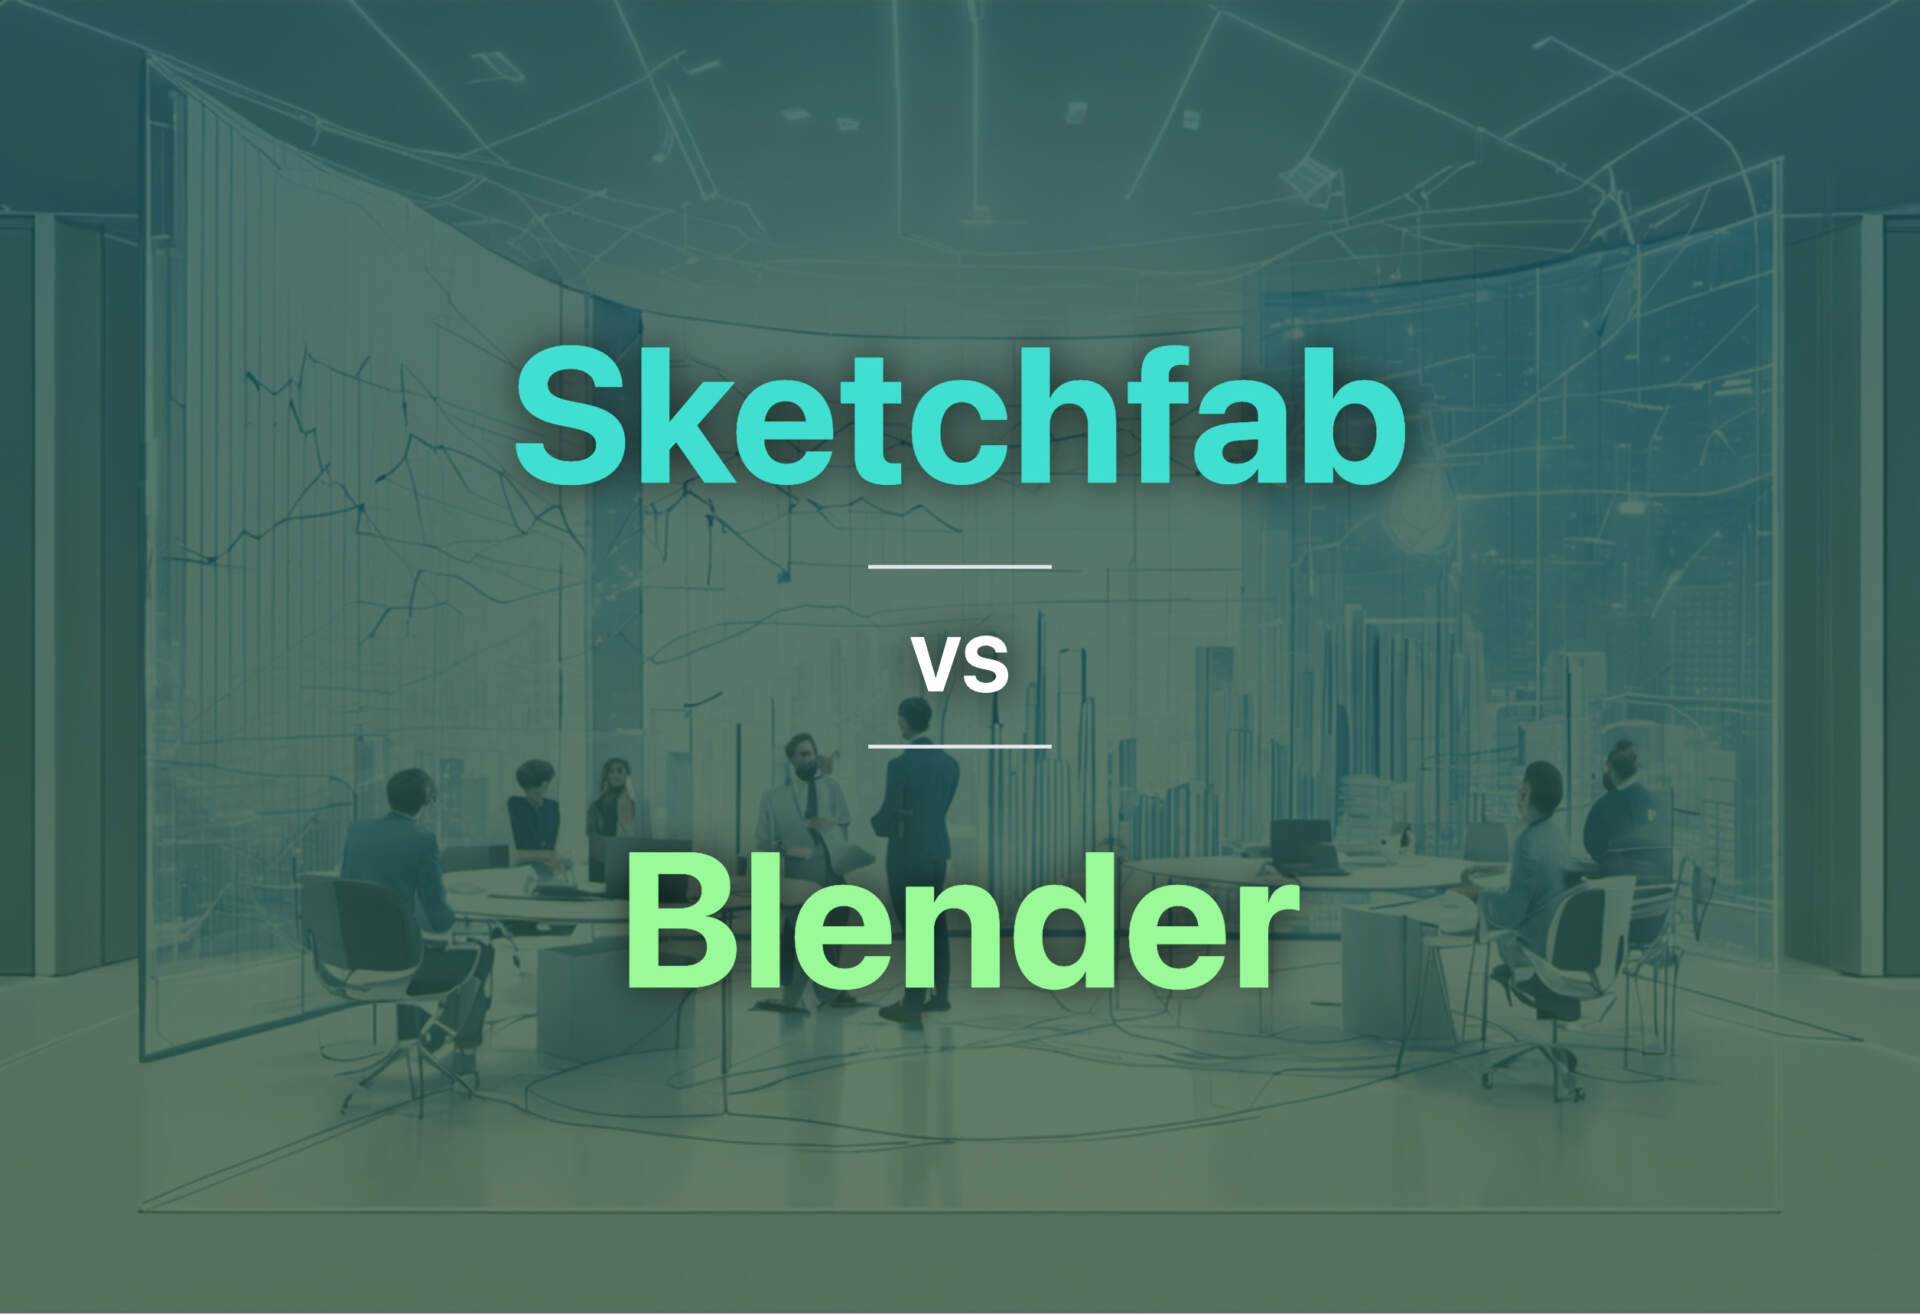 Sketchfab and Blender compared